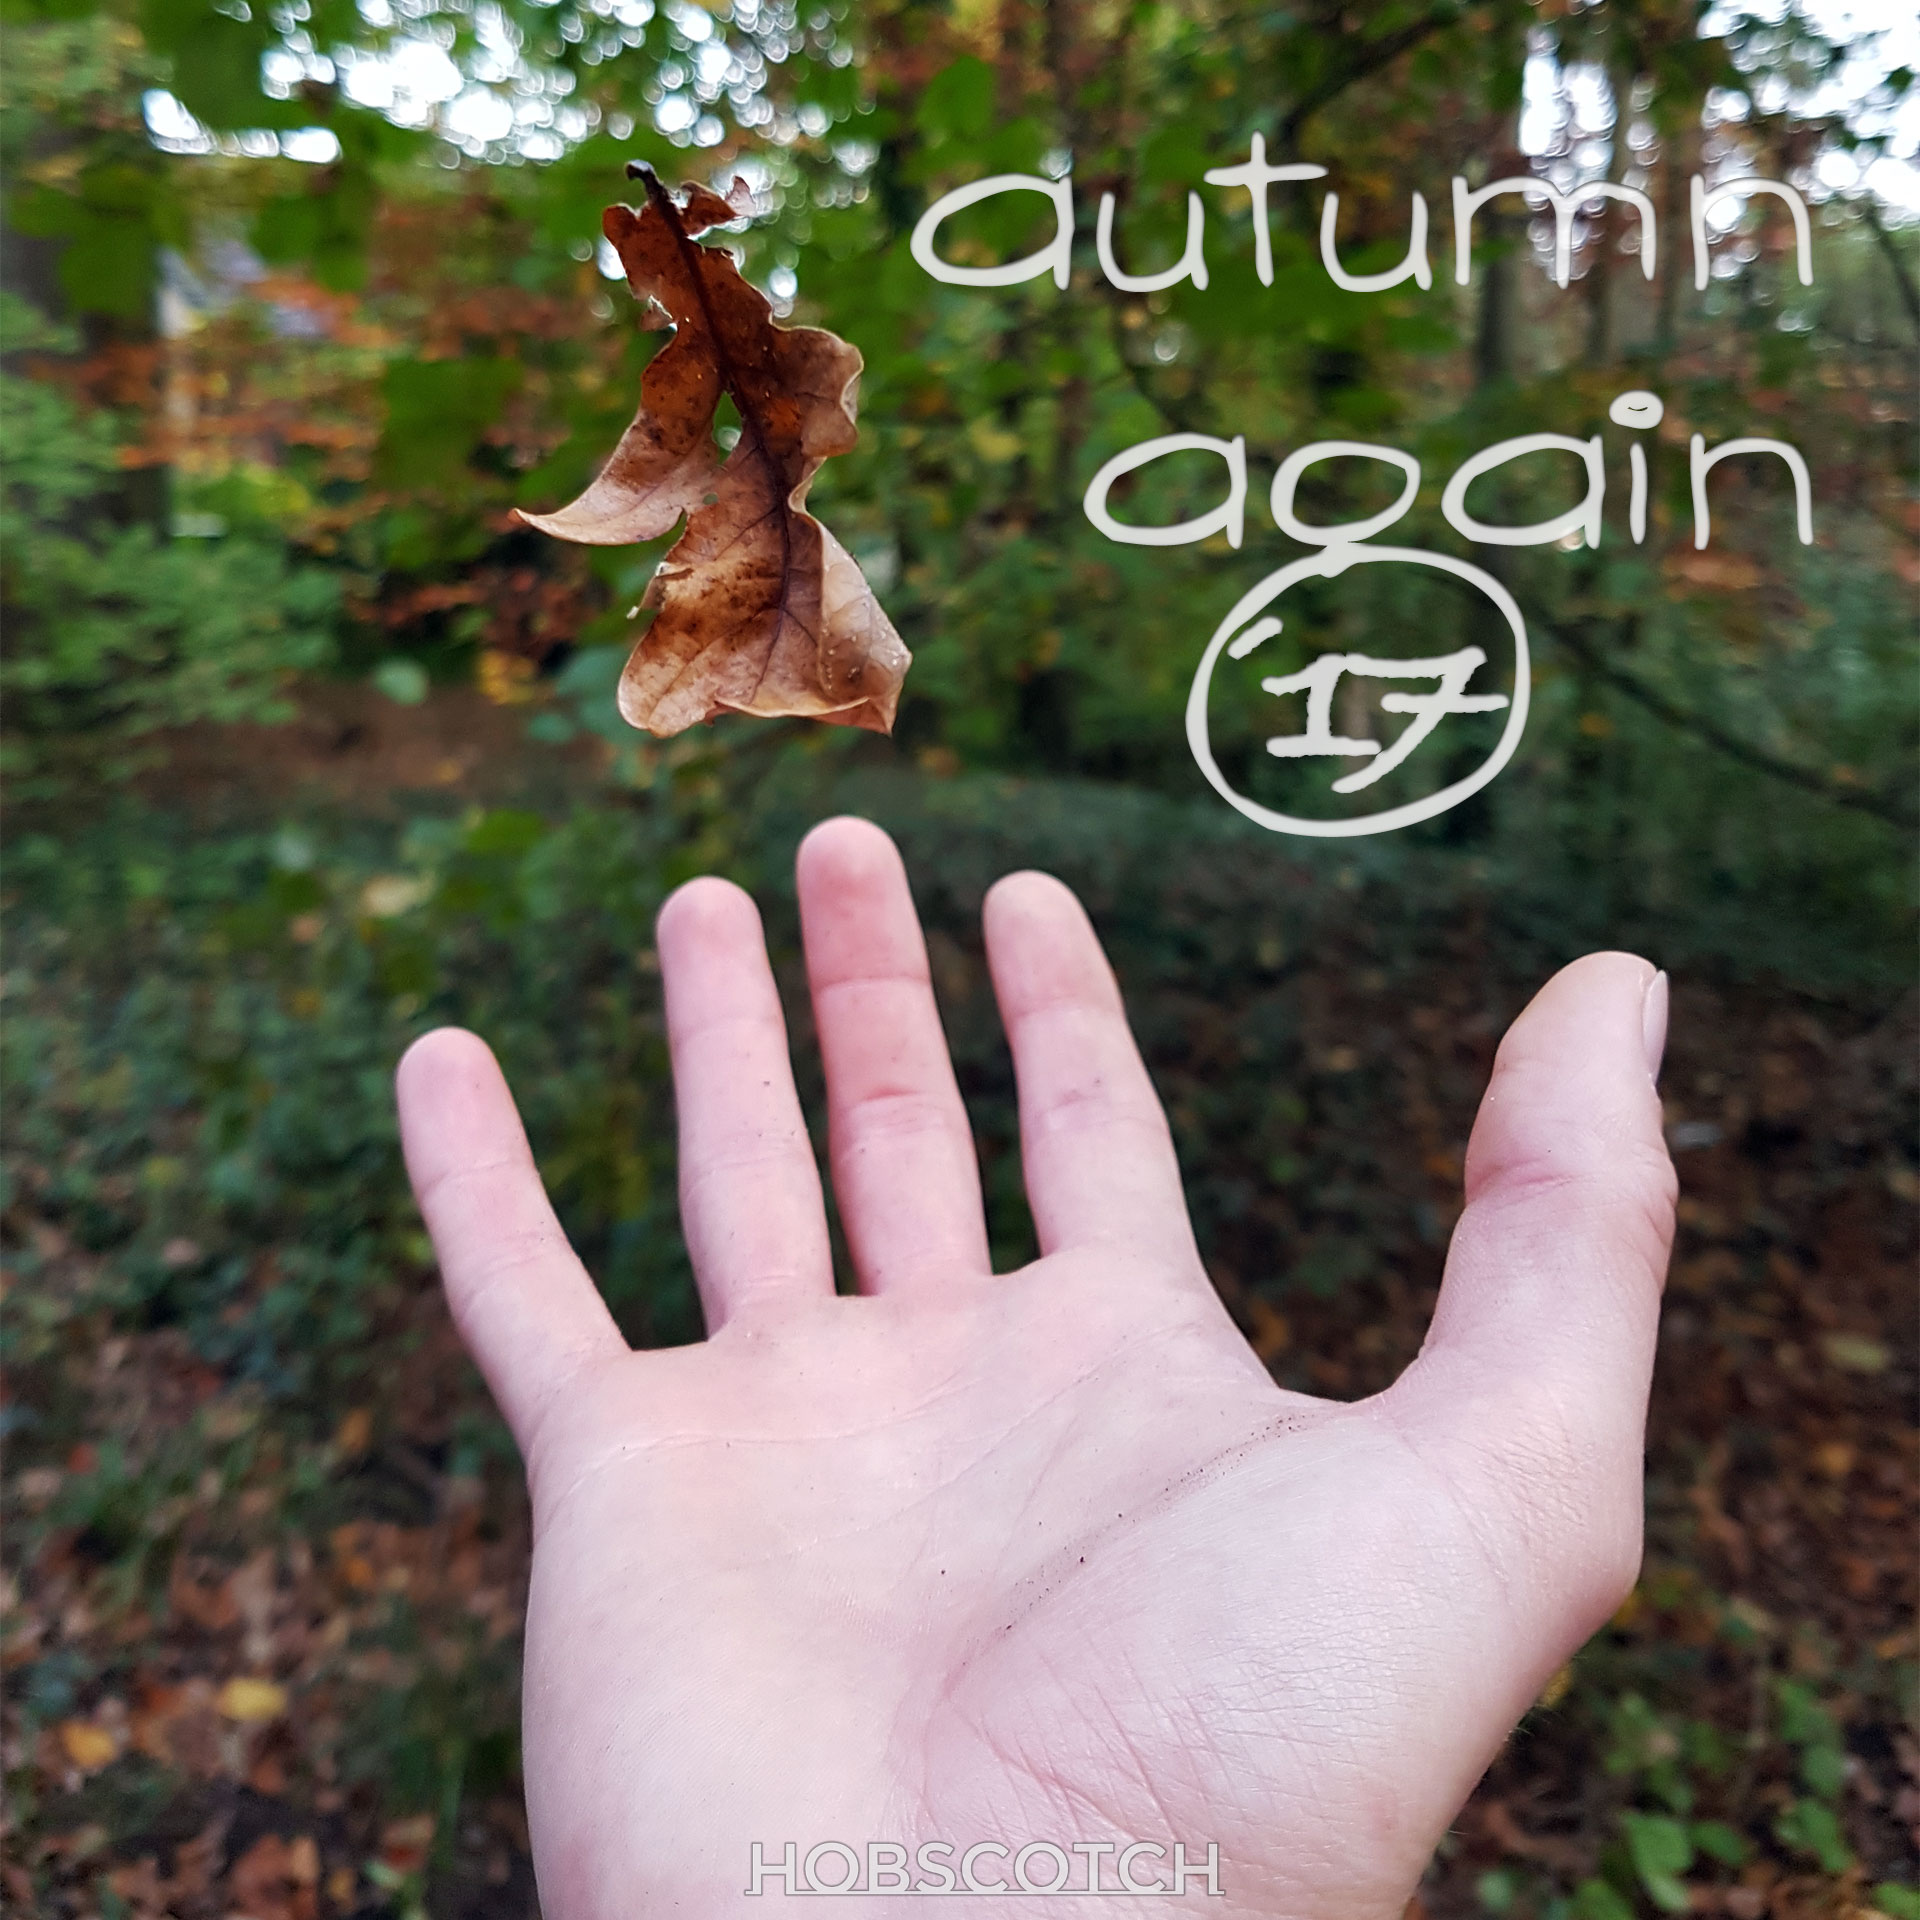 Spotify Playlist: Autumn again '17